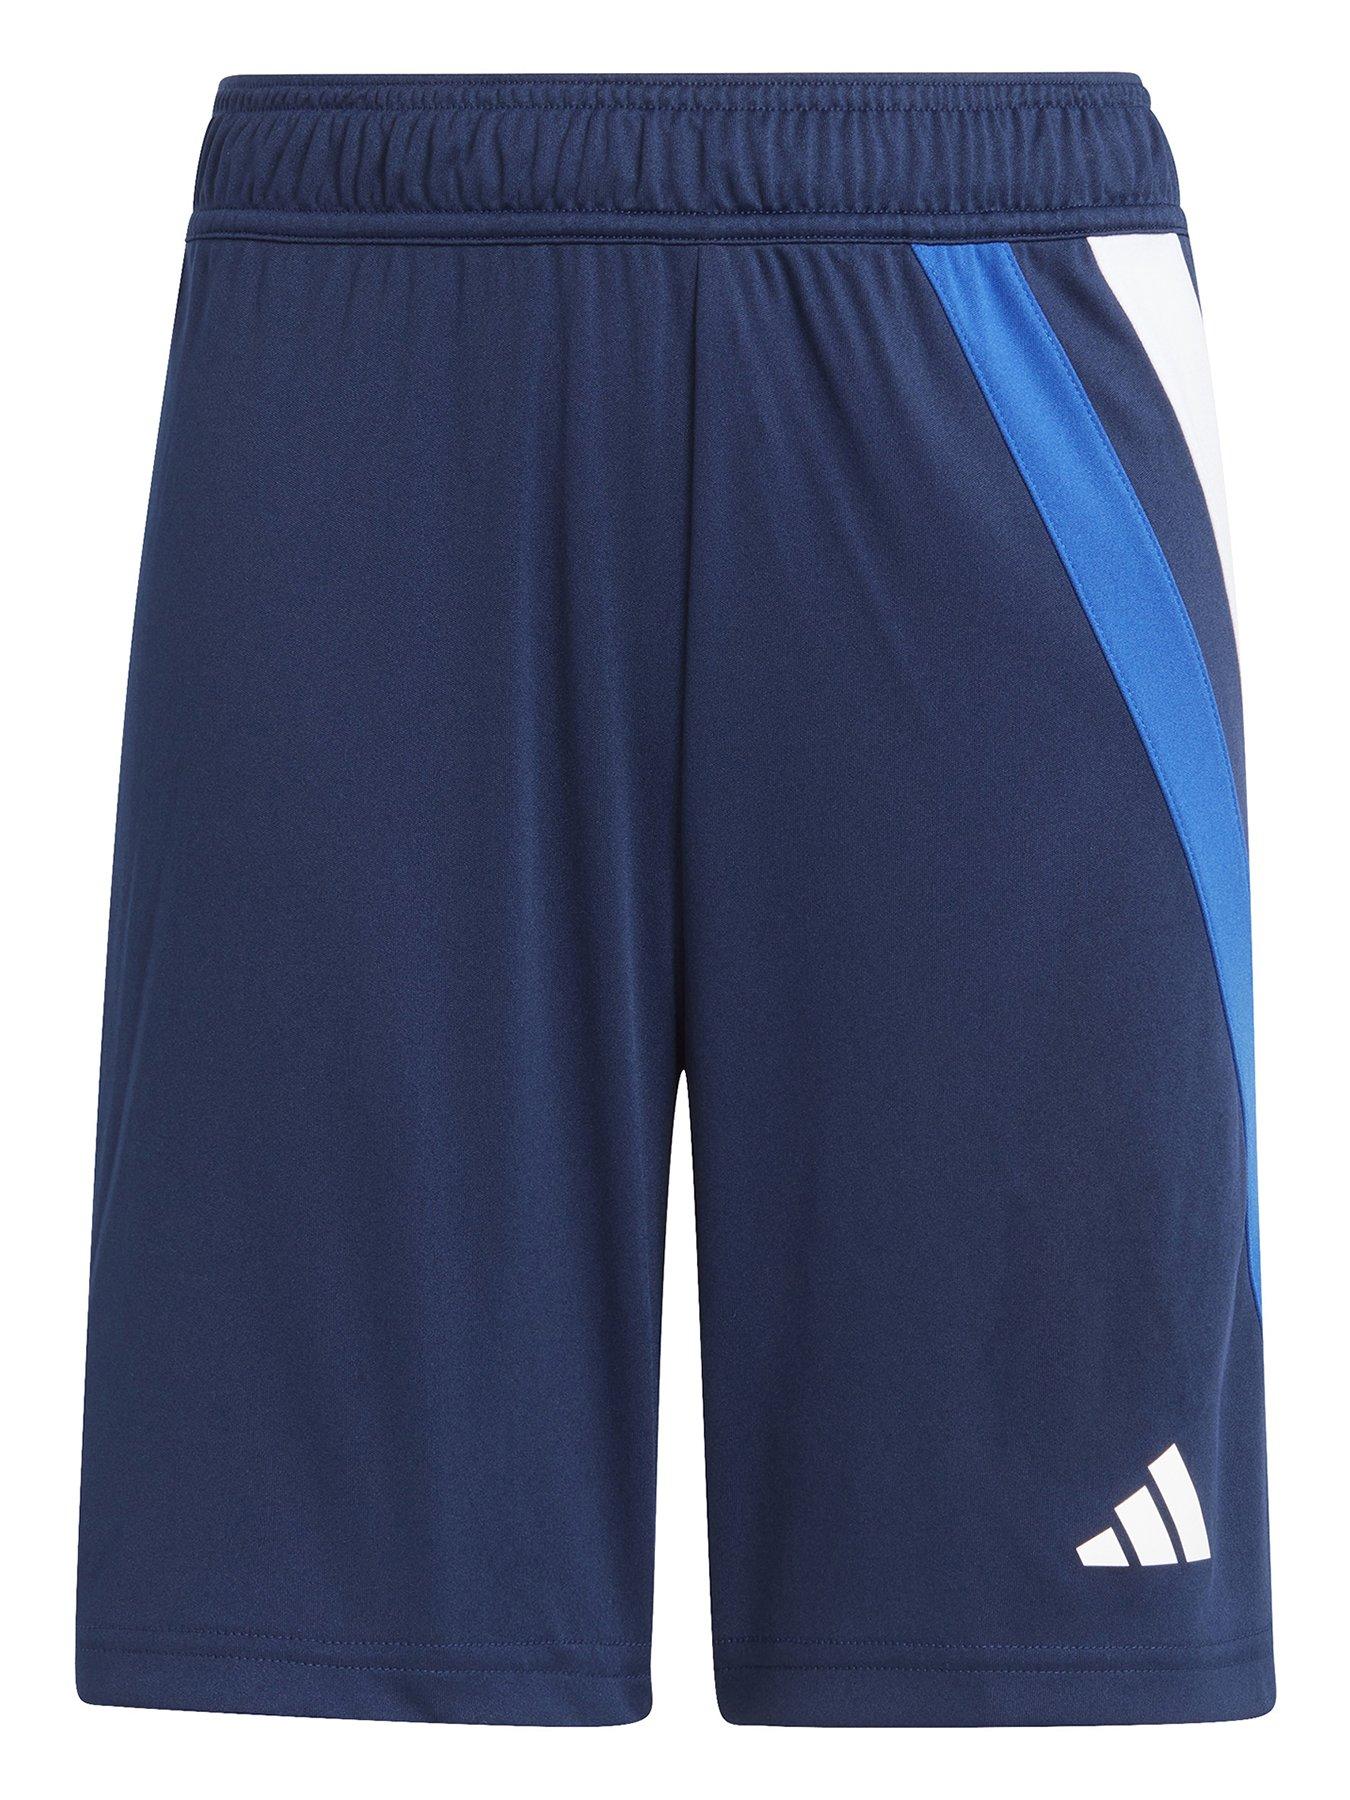 adidas unisex-child Tall Size Parma 16 Shorts, Dark Blue/White, XX